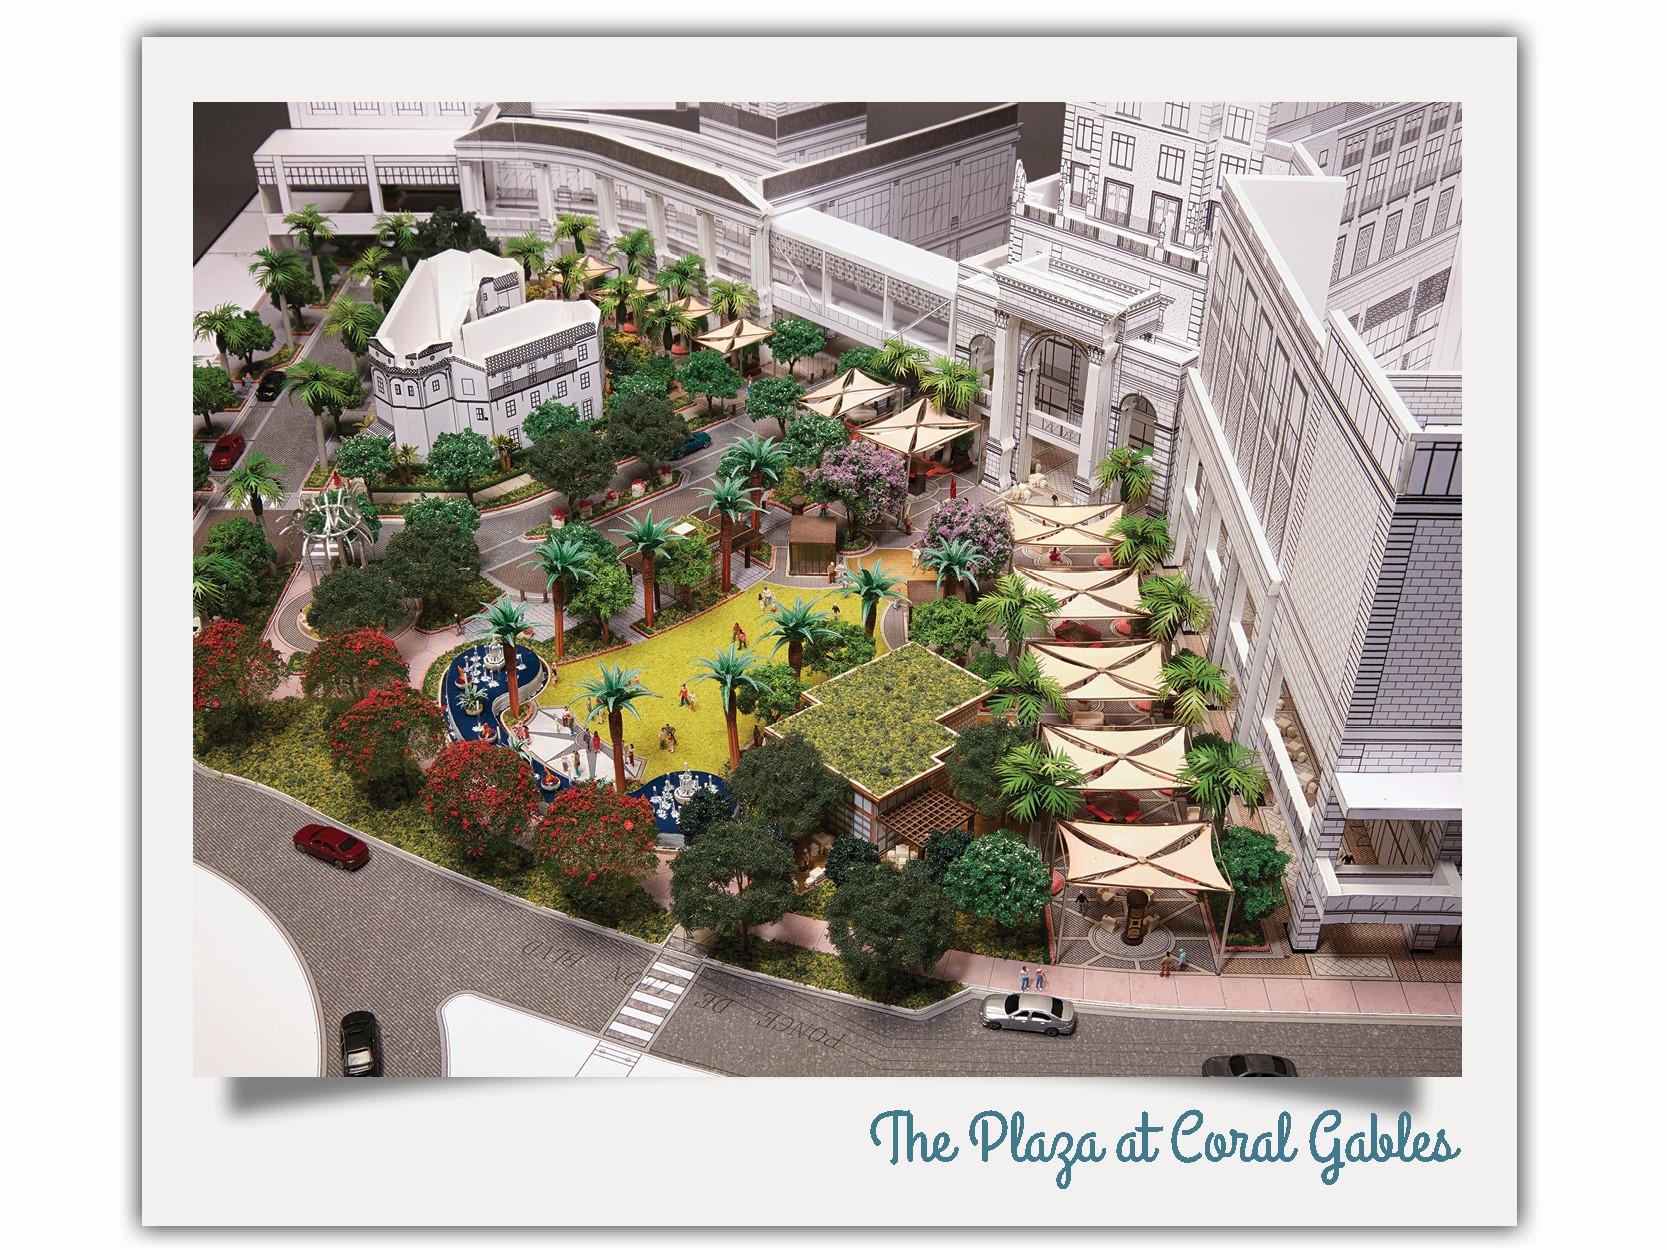 The Plaza at Coral Gables